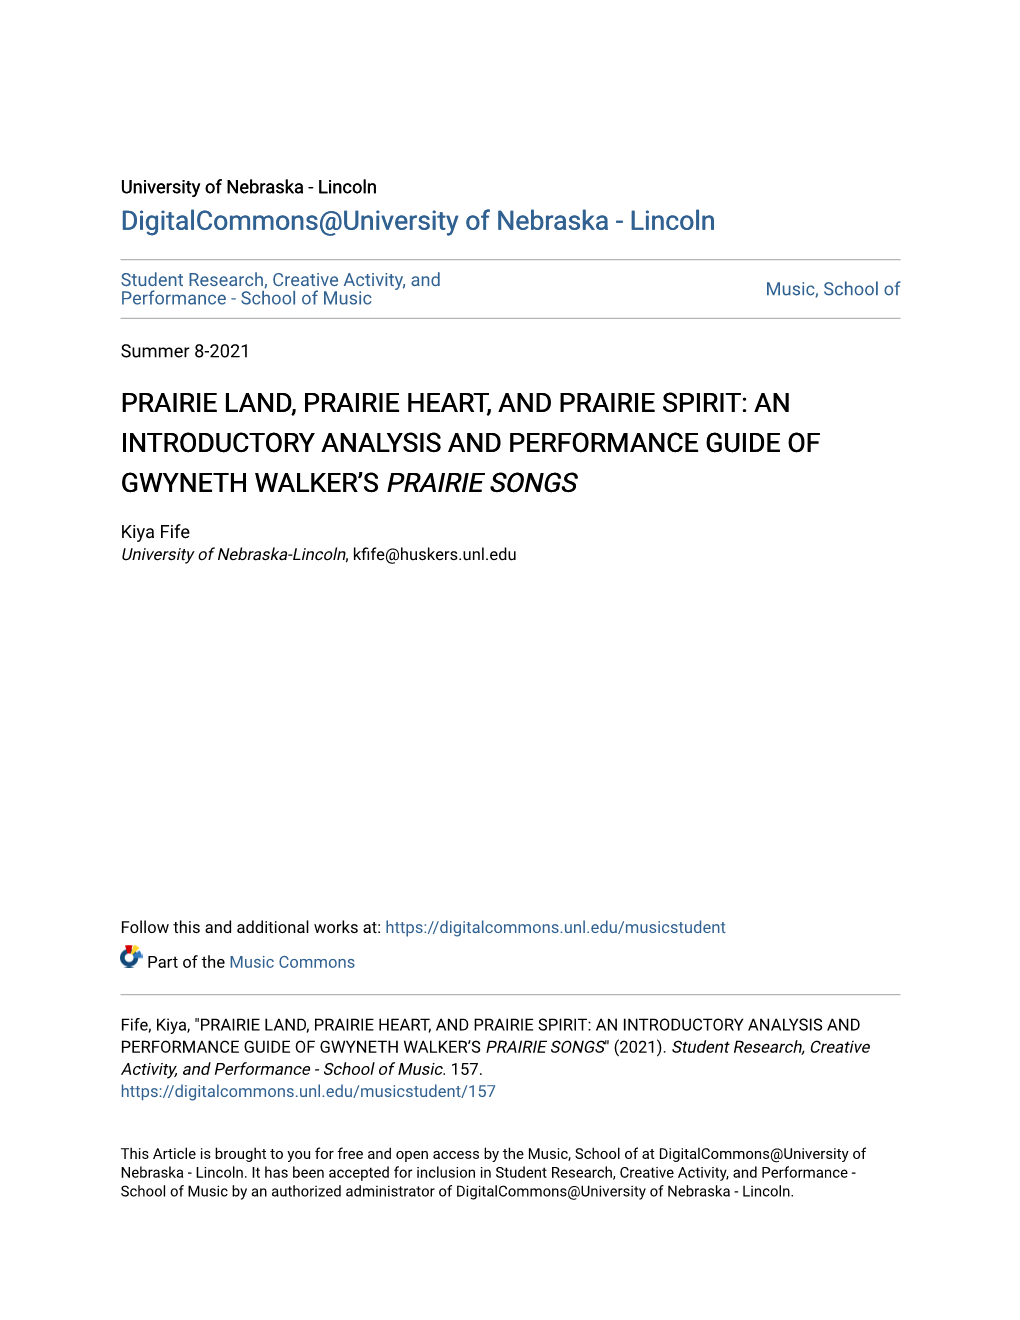 Prairie Land, Prairie Heart, and Prairie Spirit: an Introductory Analysis and Performance Guide of Gwyneth Walker’S Prairie Songs